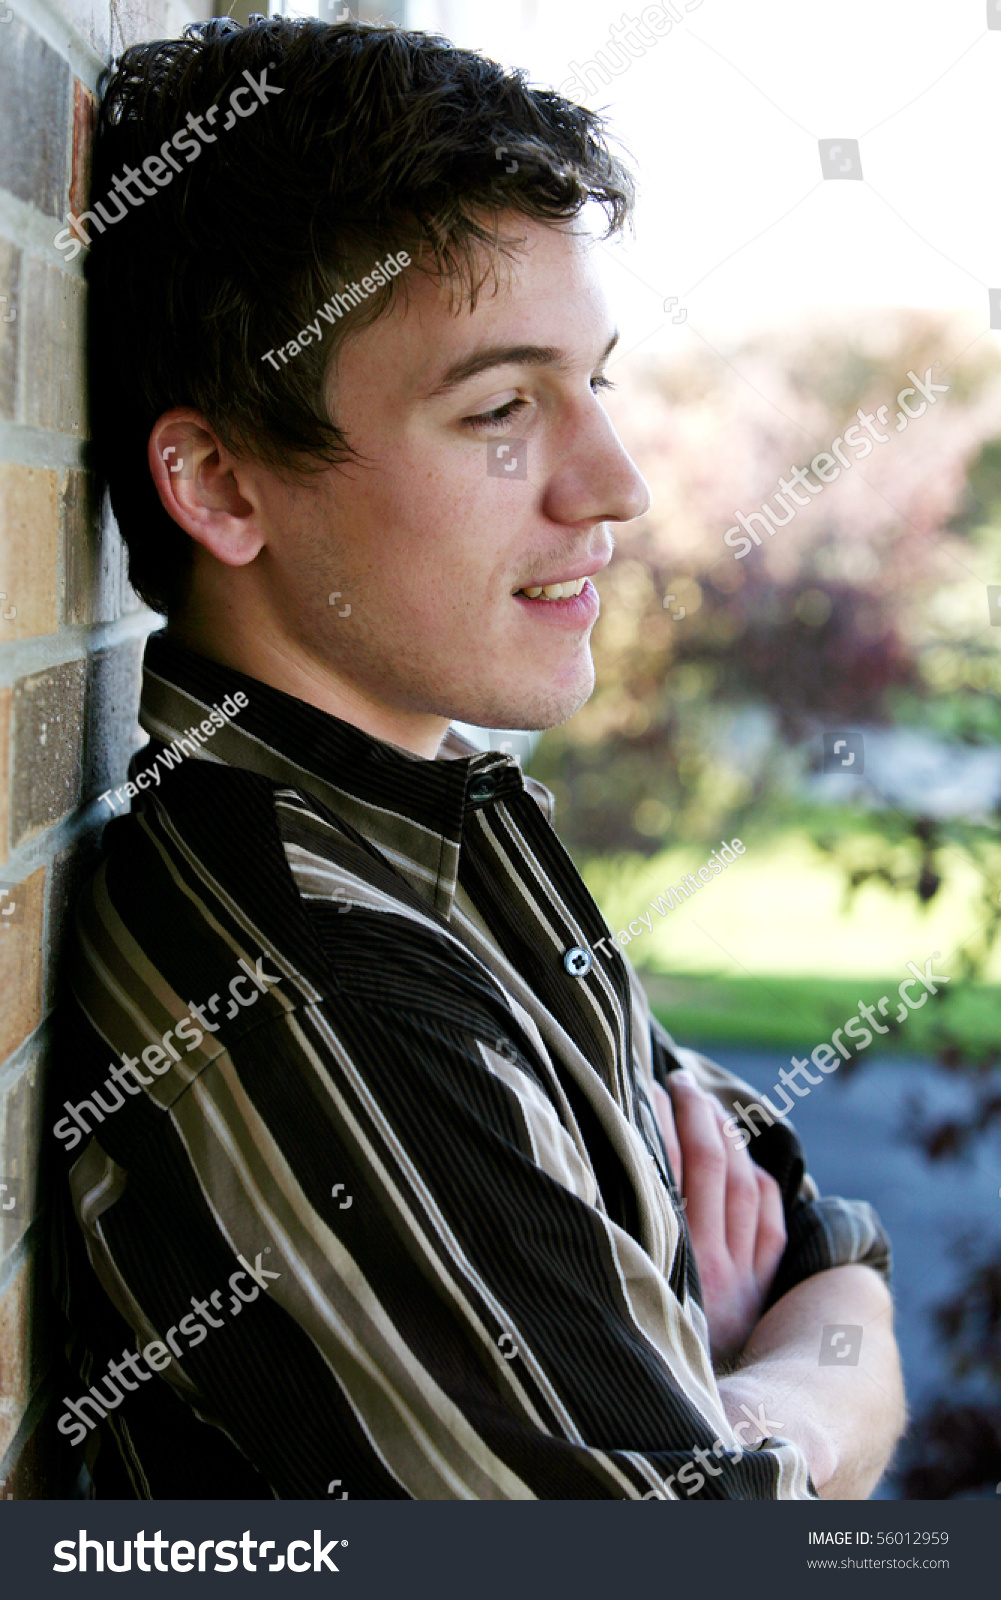 Handsome Teen Boy By Brick Wall Stock Photo 56012959 - Shutterstock